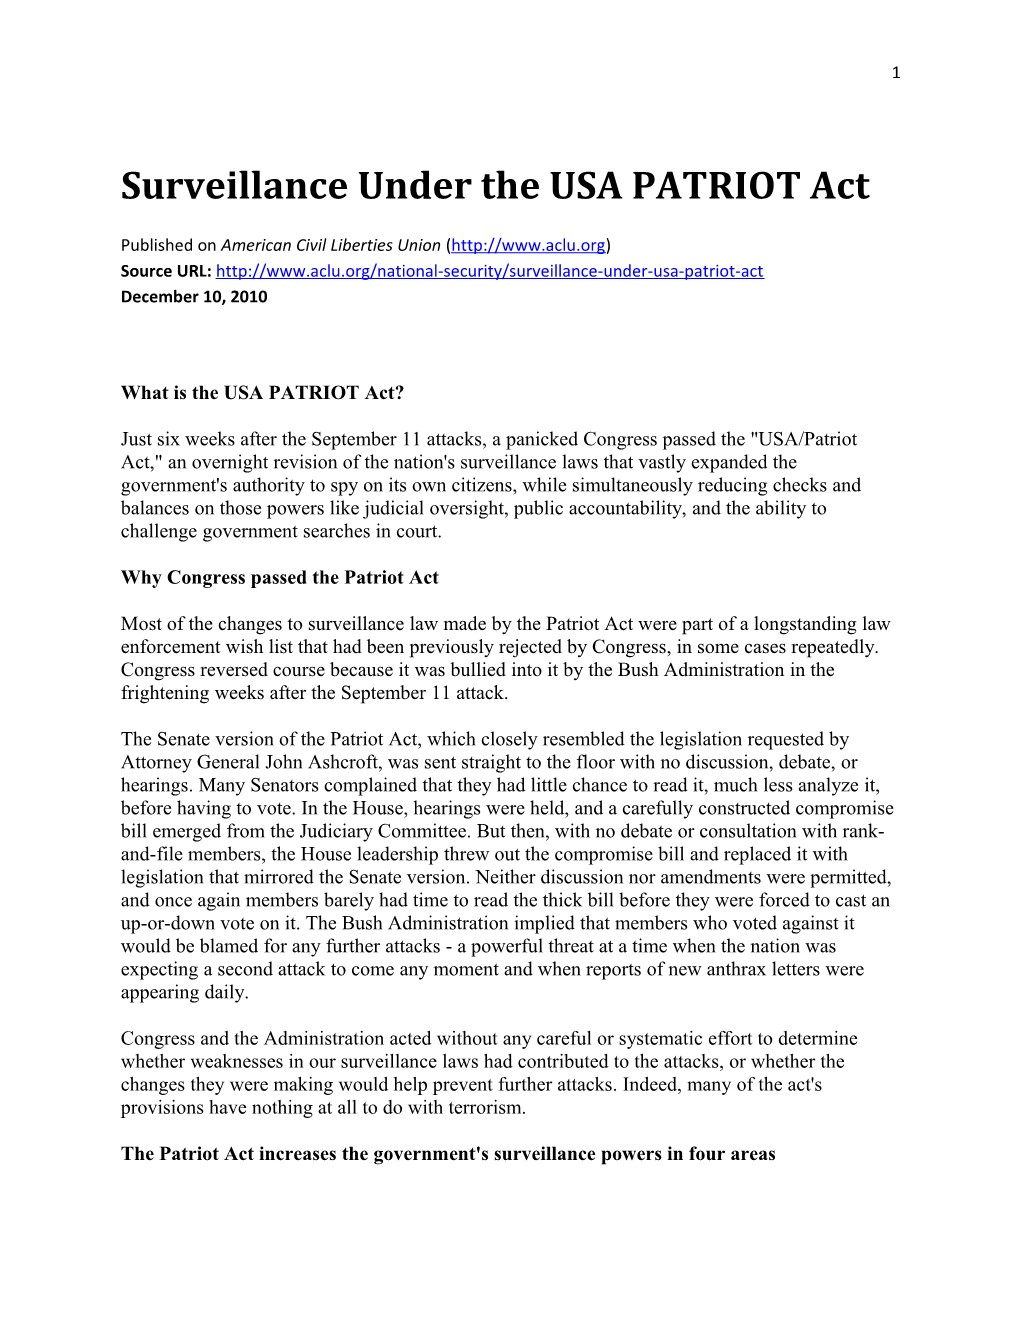 Surveillance Under the USA PATRIOT Act